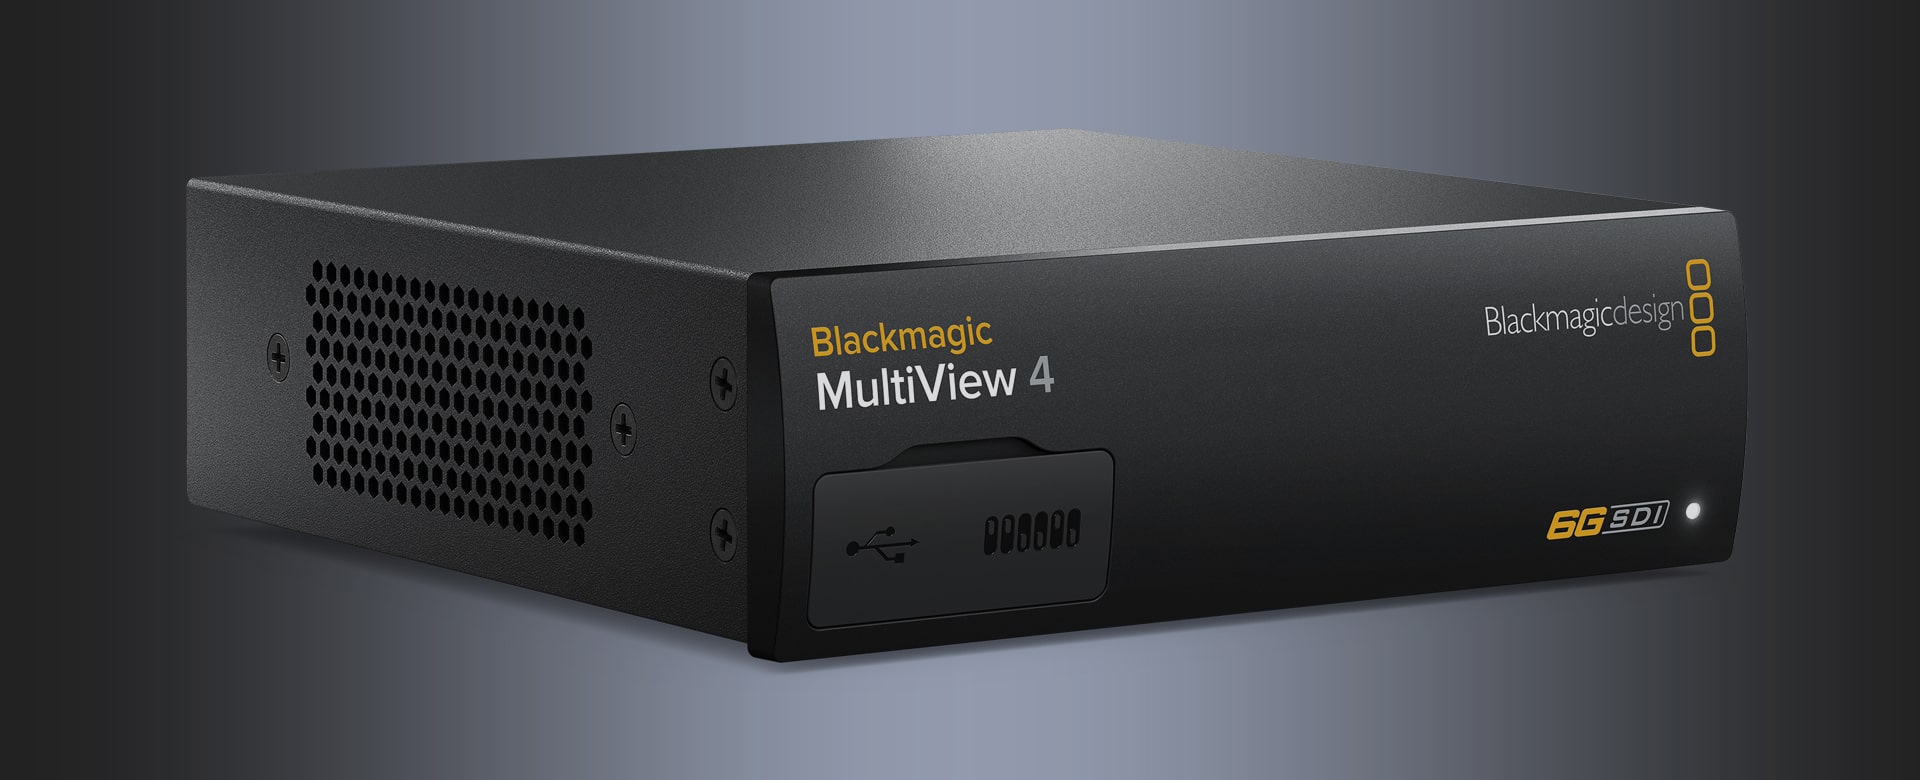 Blackmagic MultiView 4